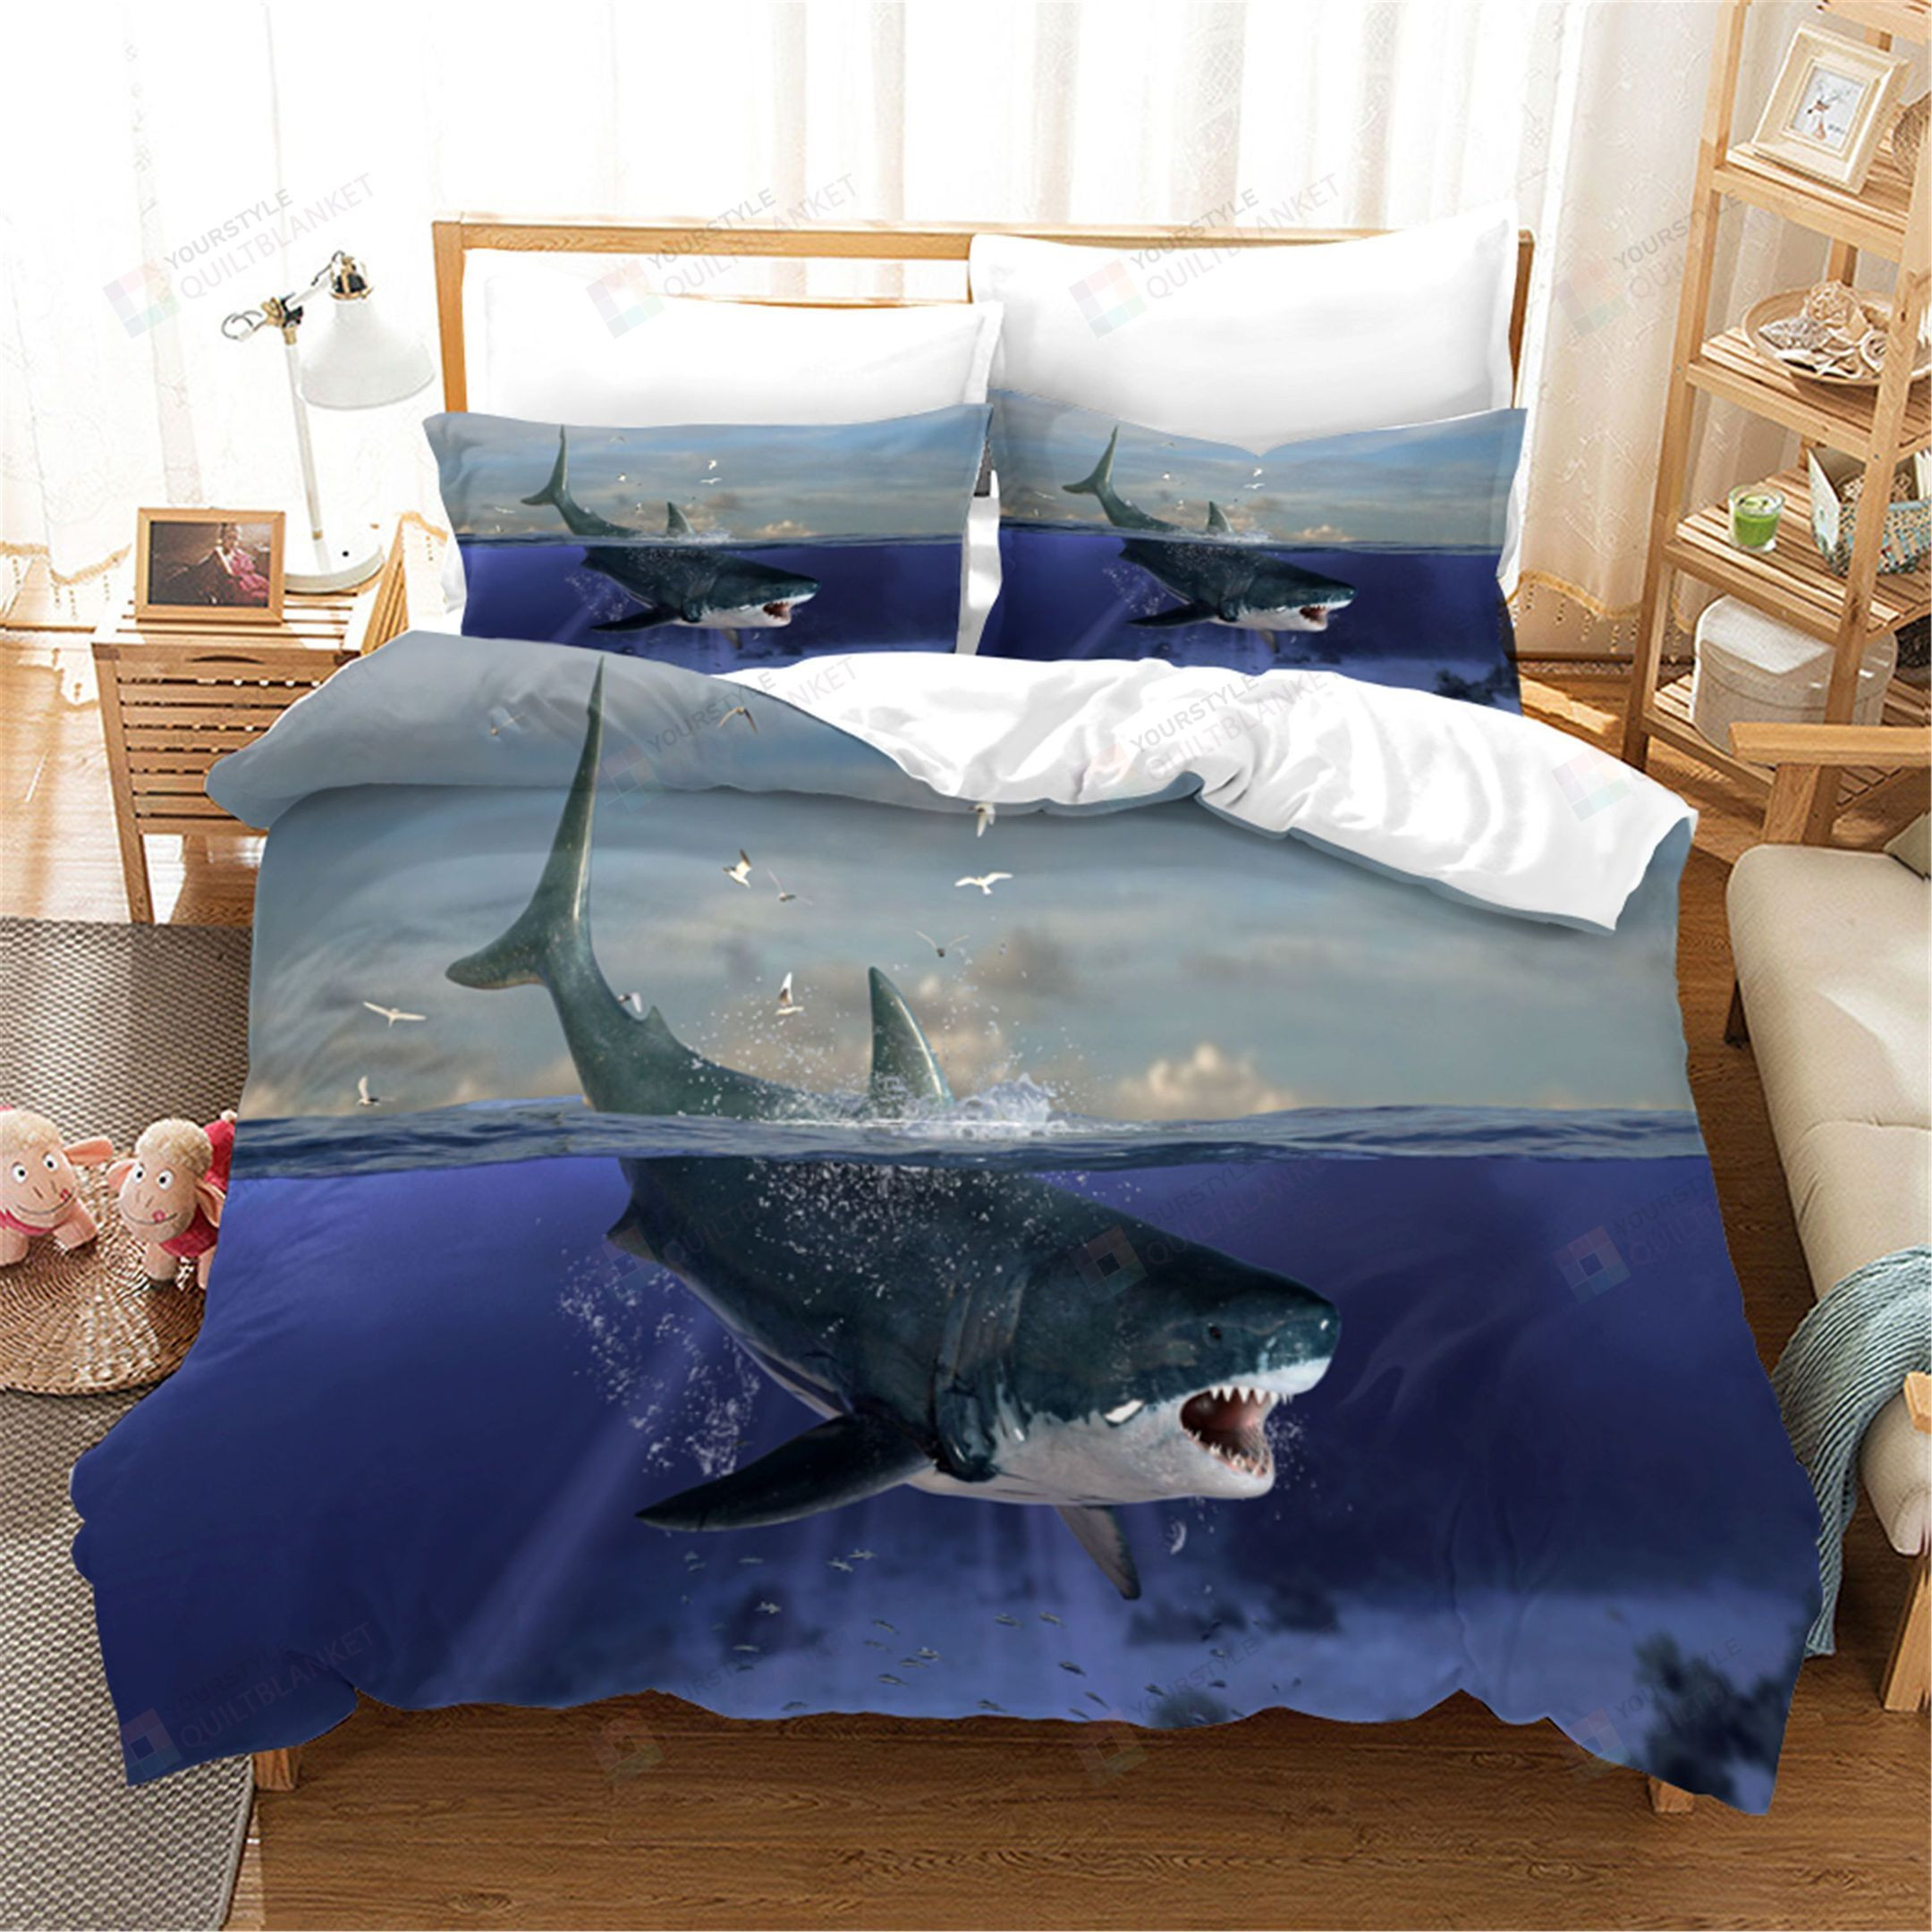 Shark Bed Sheets Spread Duvet Cover Bedding Sets